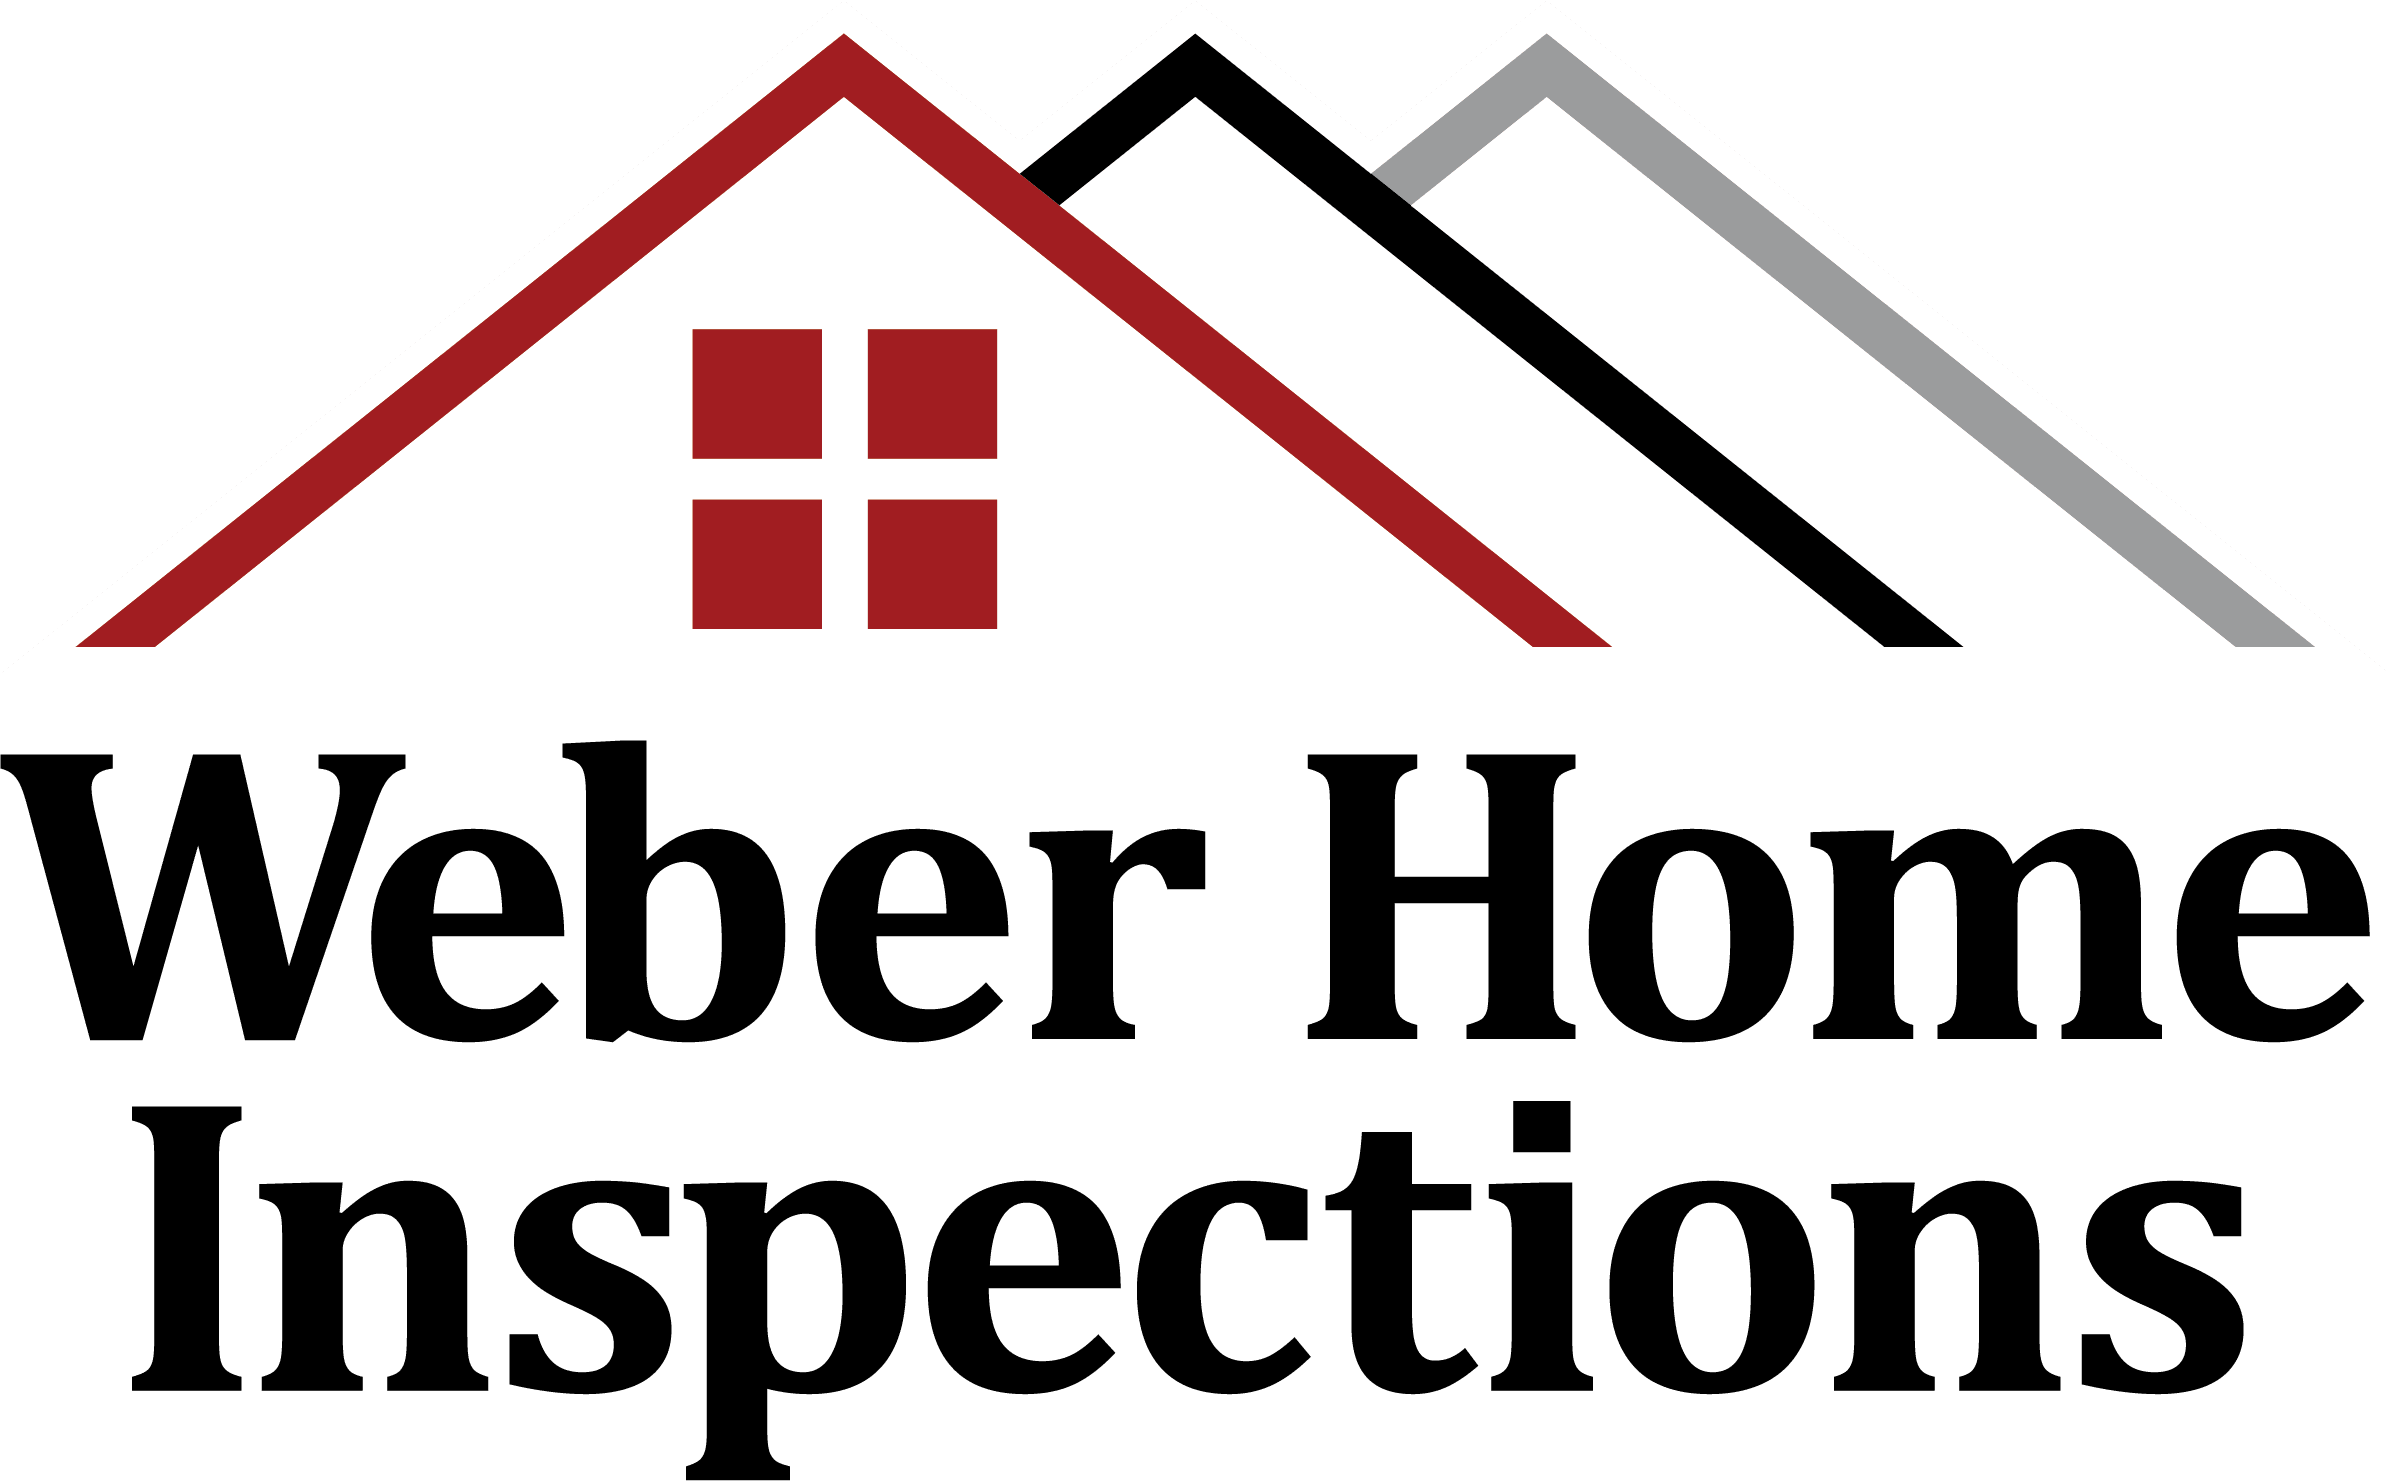 Weber Home Inspections Logo